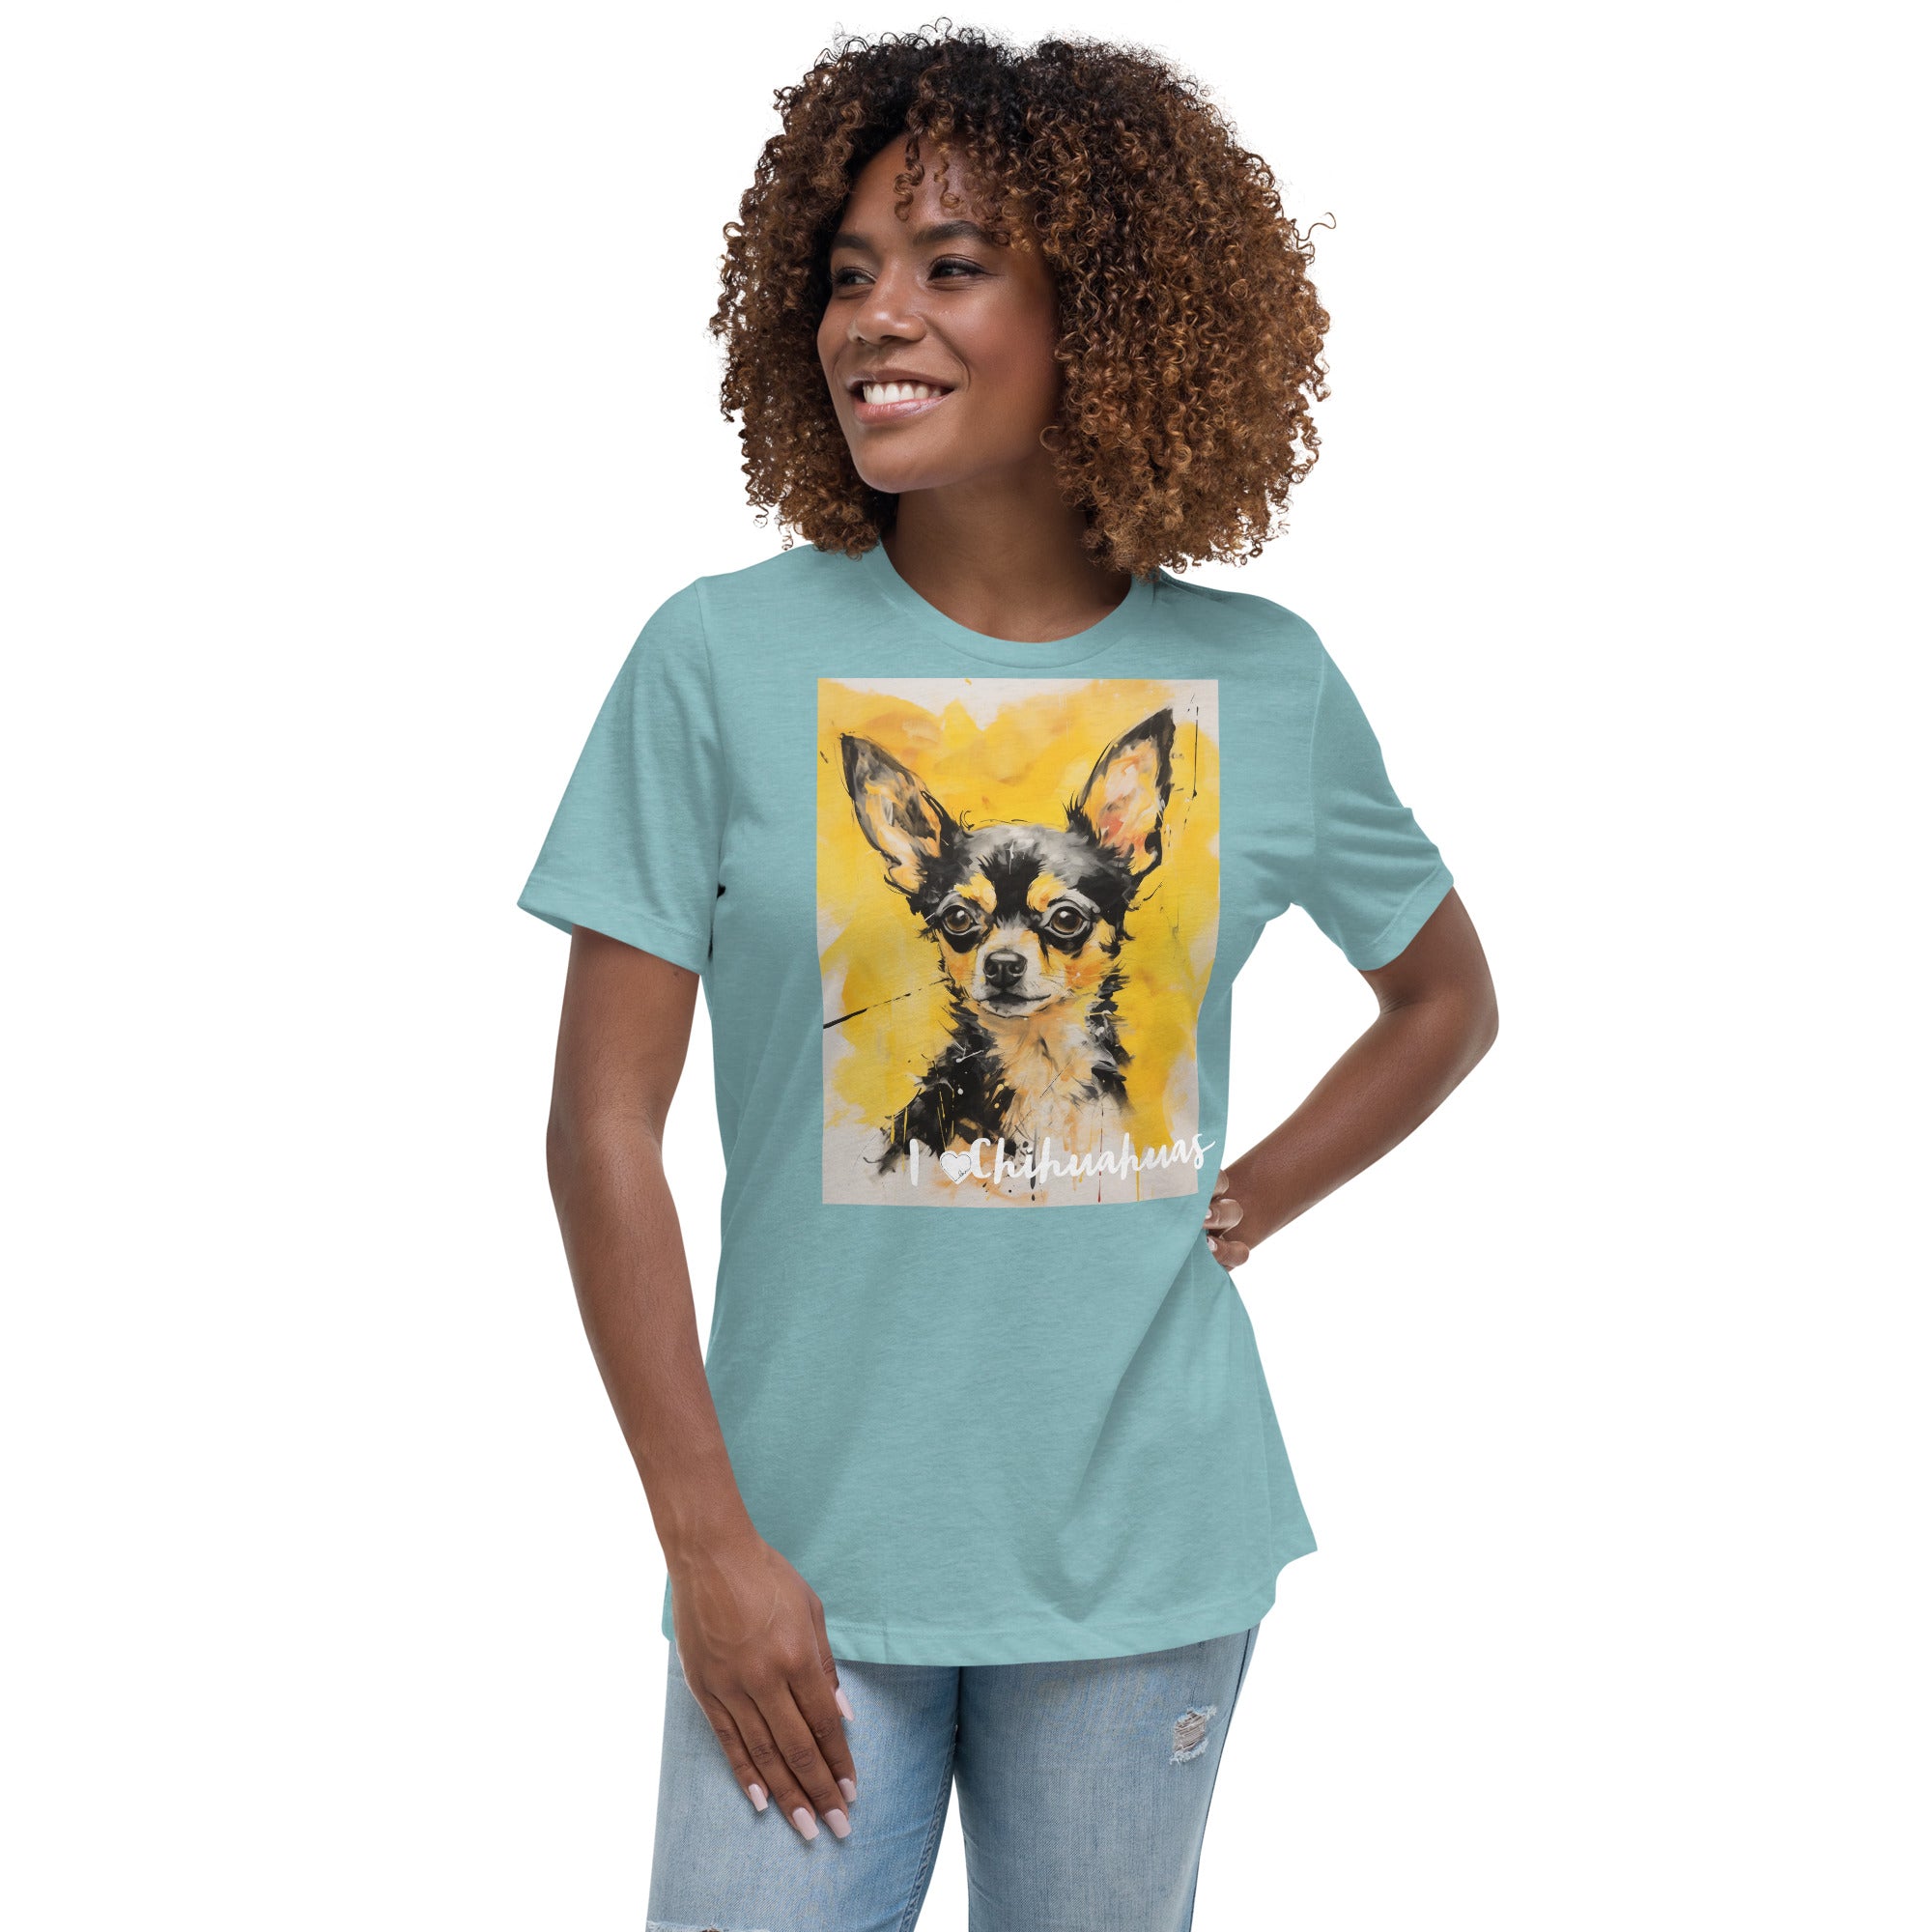 Women's Relaxed T-Shirt - I ❤ Dogs - Chihuahua